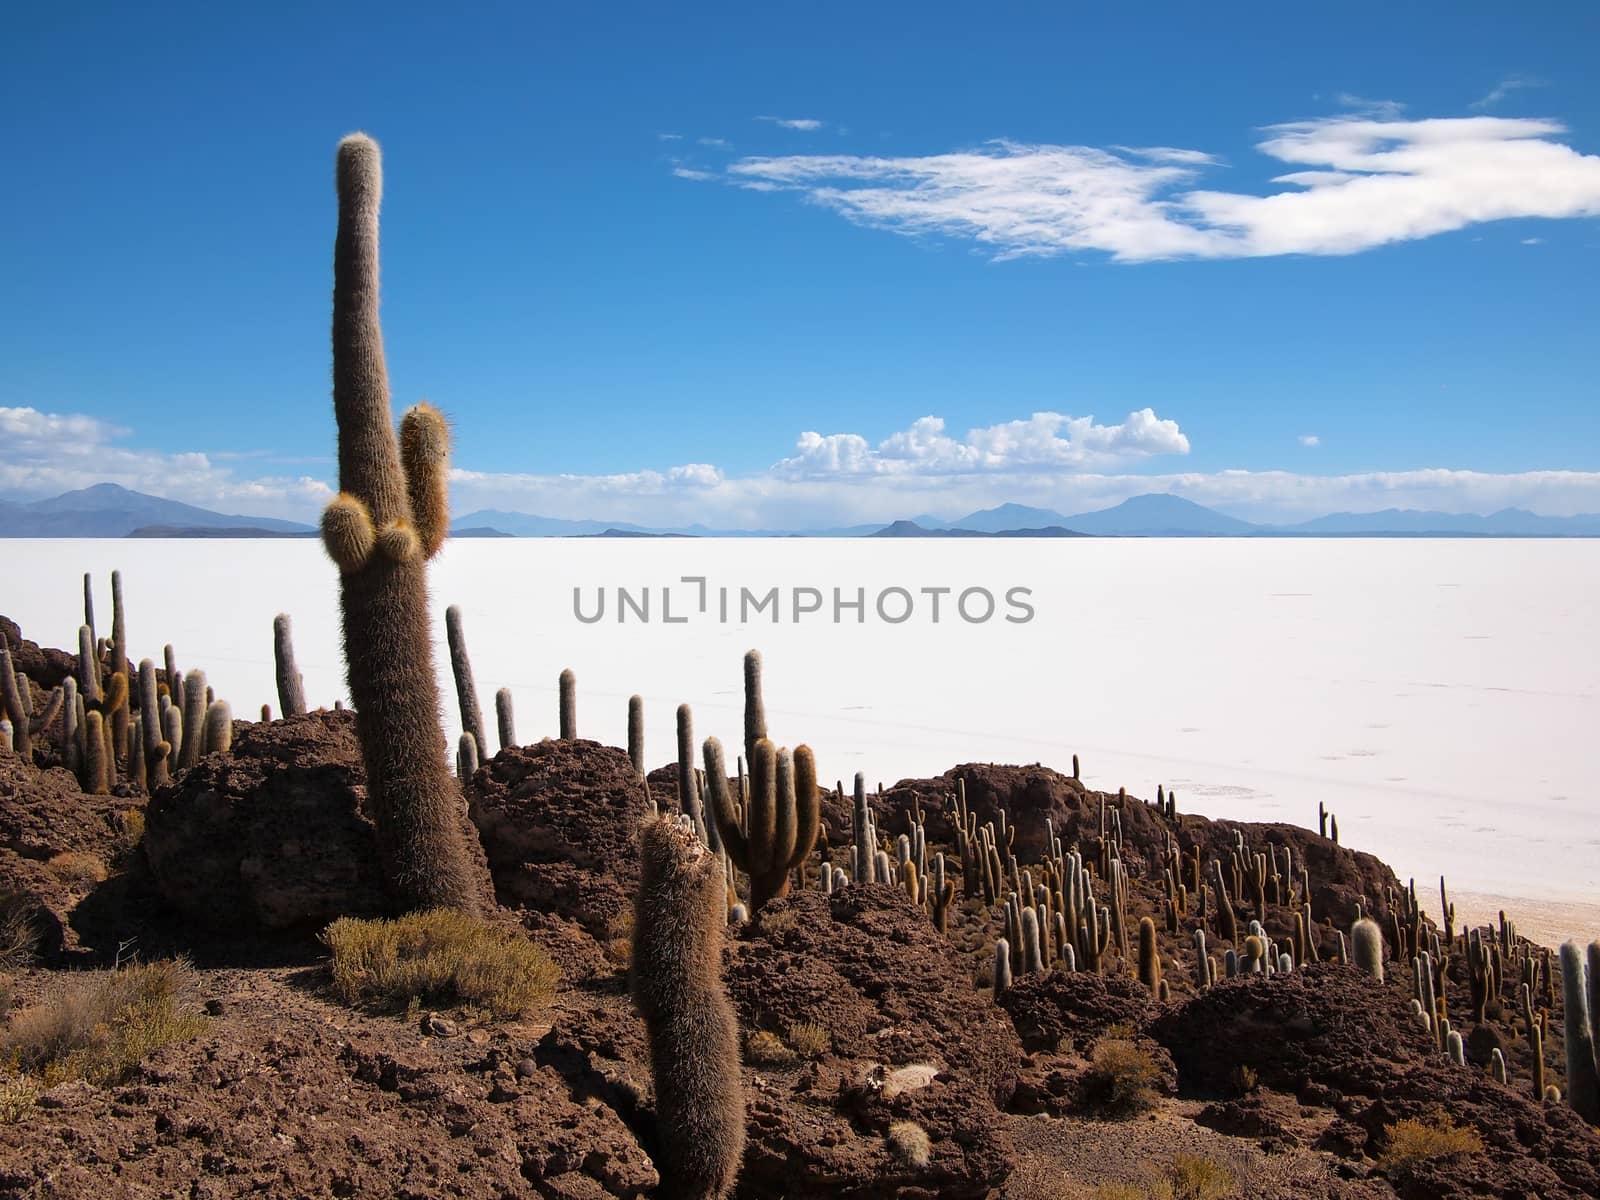 Giant cactus and Uyuni salt lake by pljvv